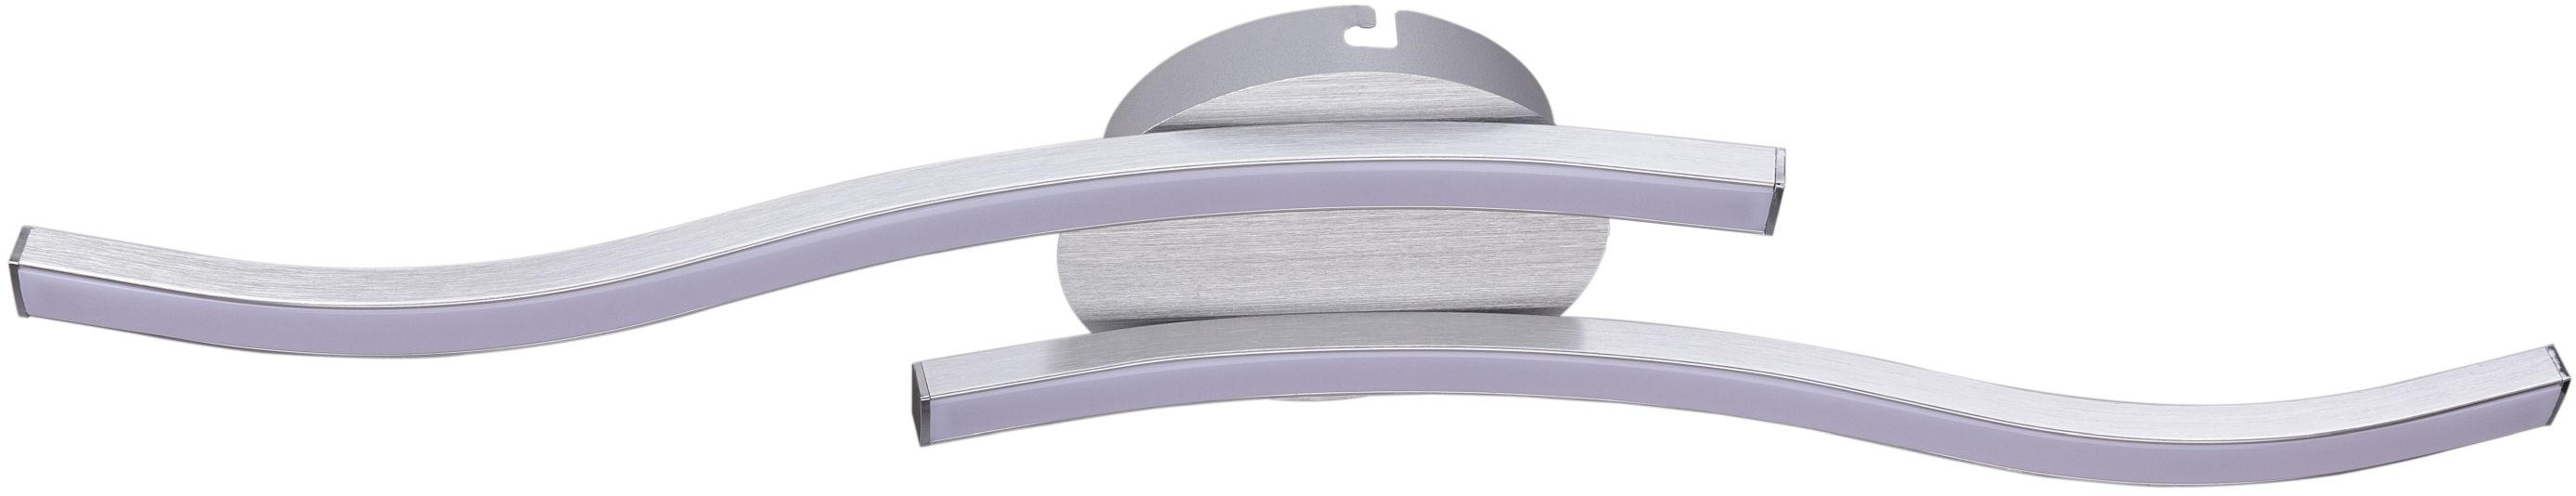 LED-DECKENLEUCHTE 5.1 W    55,5/12/7 cm  - Silberfarben, Basics, Kunststoff/Metall (55,5/12/7cm) - Novel